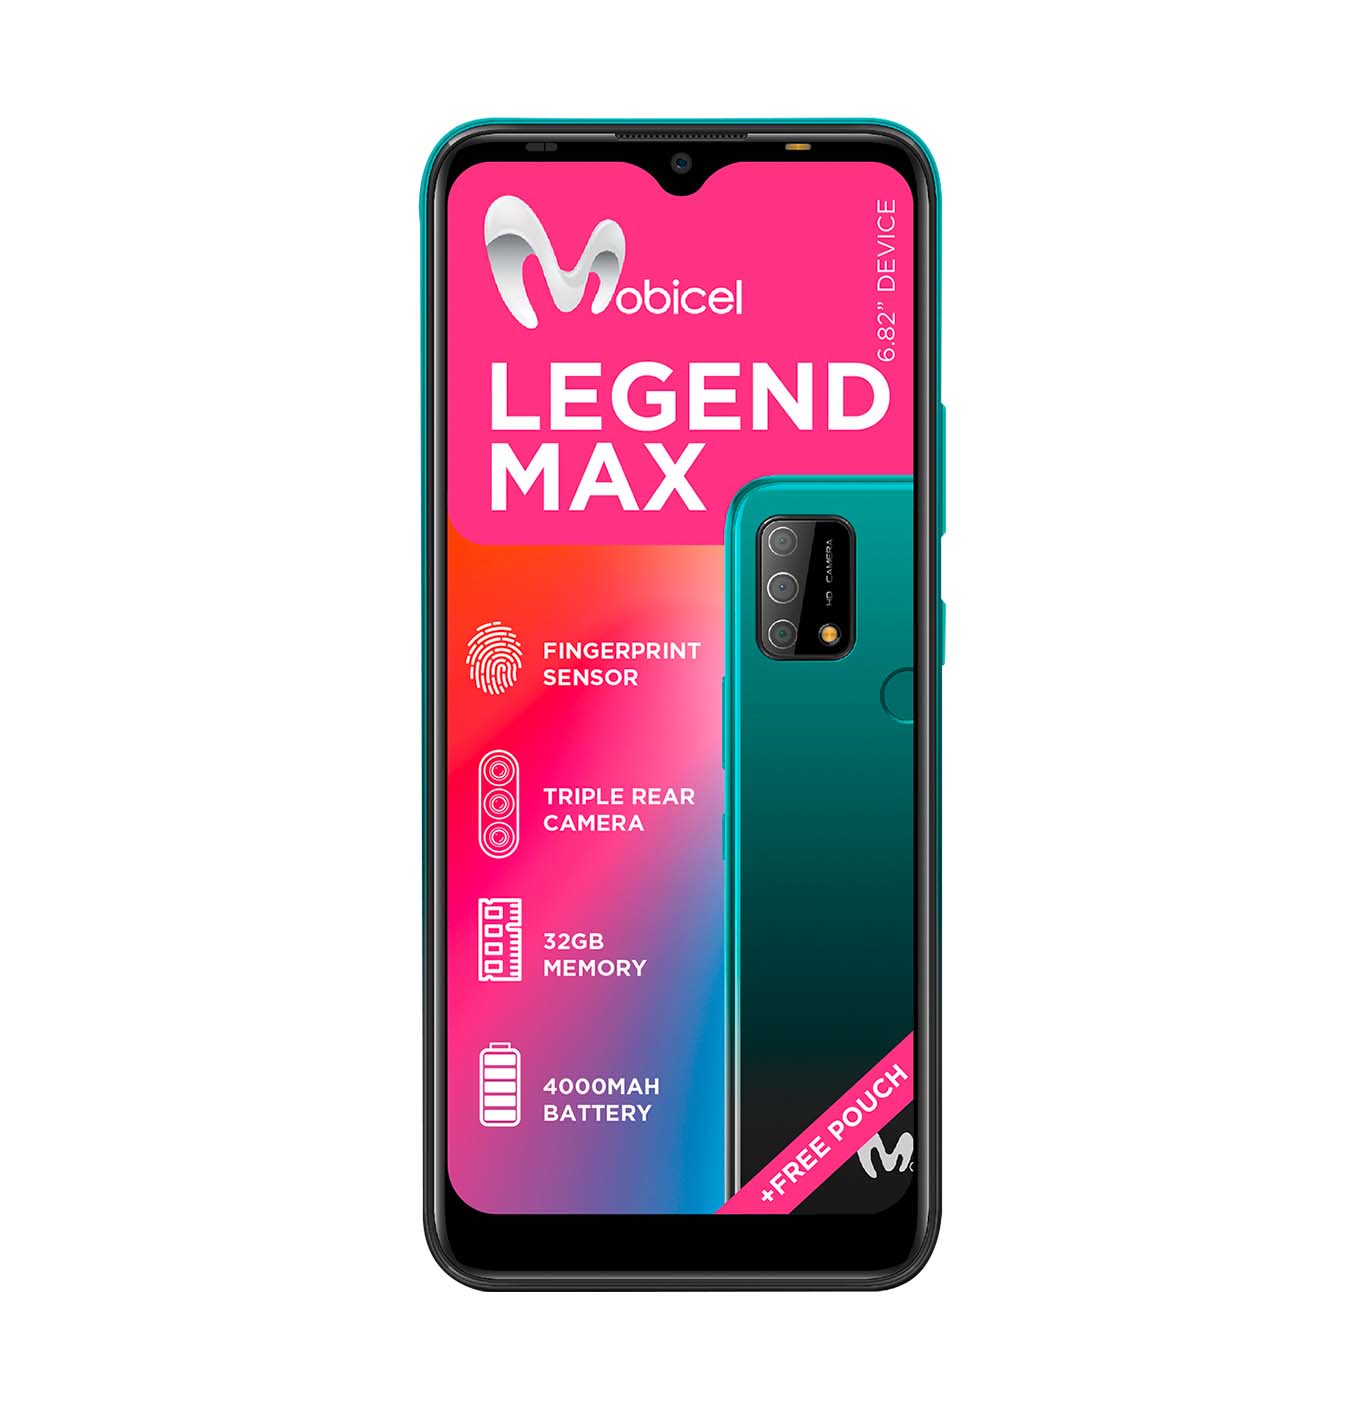 Mobicel Legend Max (Vodacom)